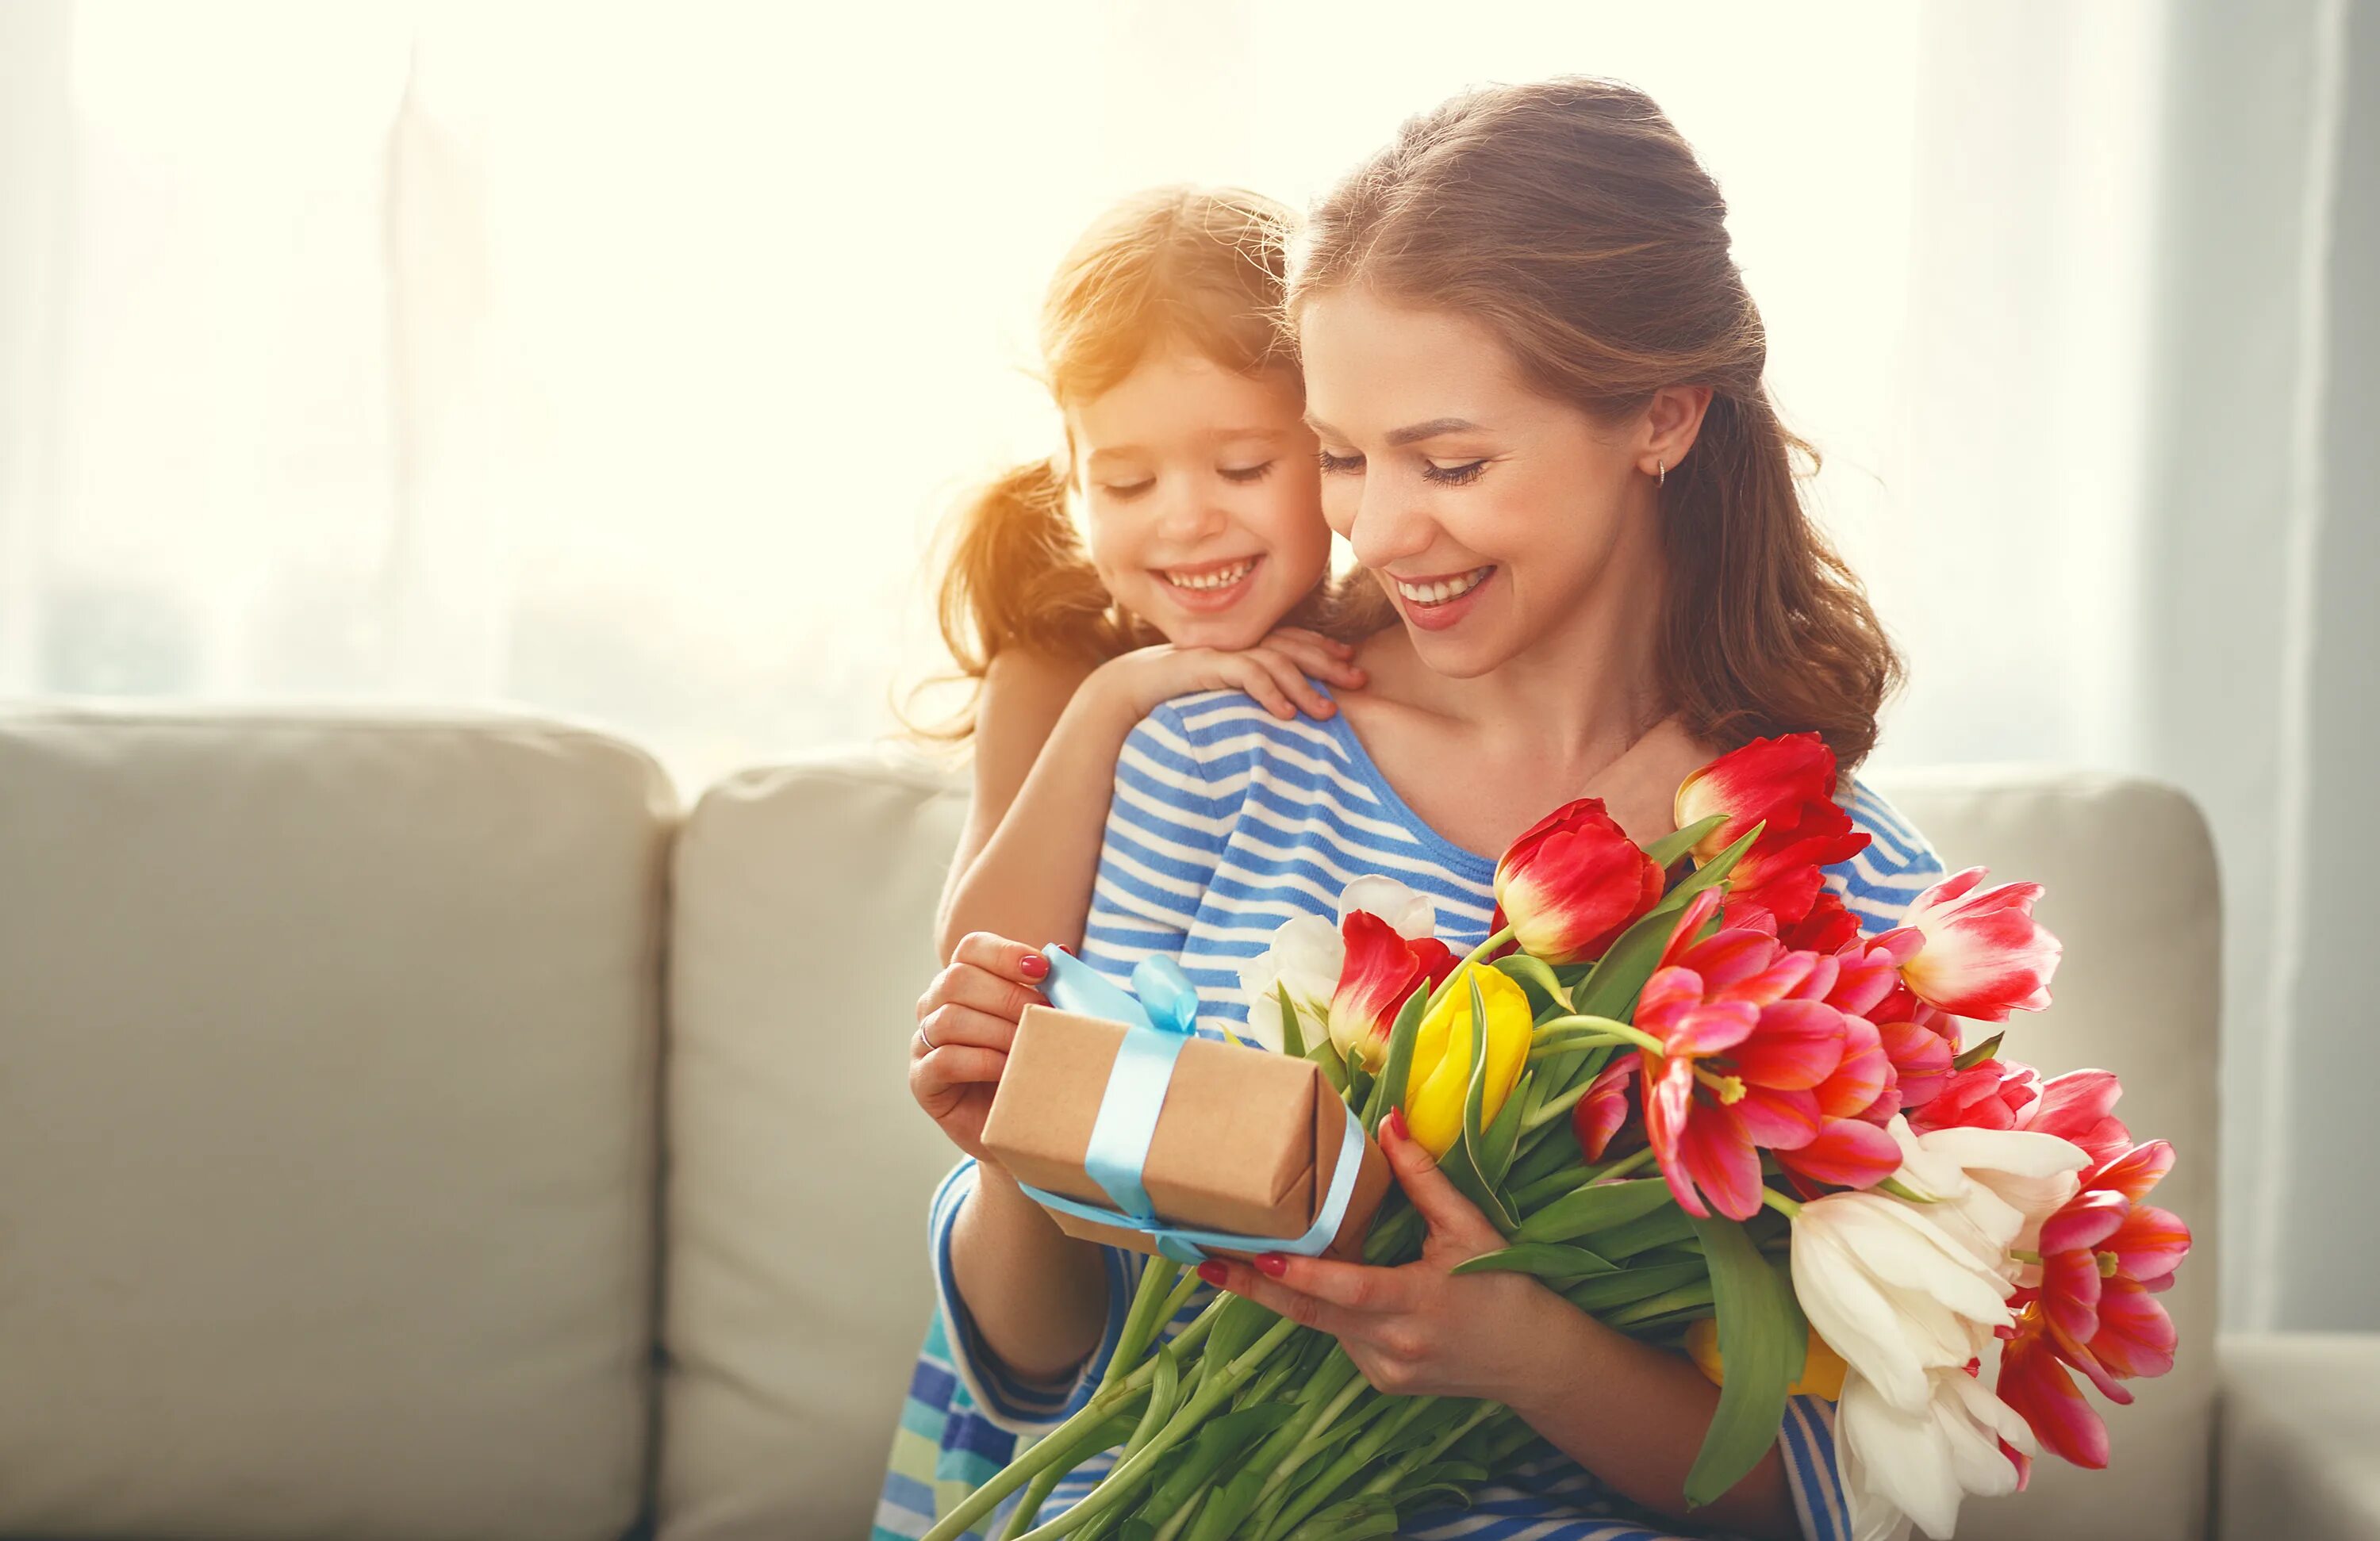 Ребенок дарит цветок маме. Ребенок дарит подарок маме. Маме дарят цветы. Ребенок дарит цветы маме. Дочка дарит подарок маме.